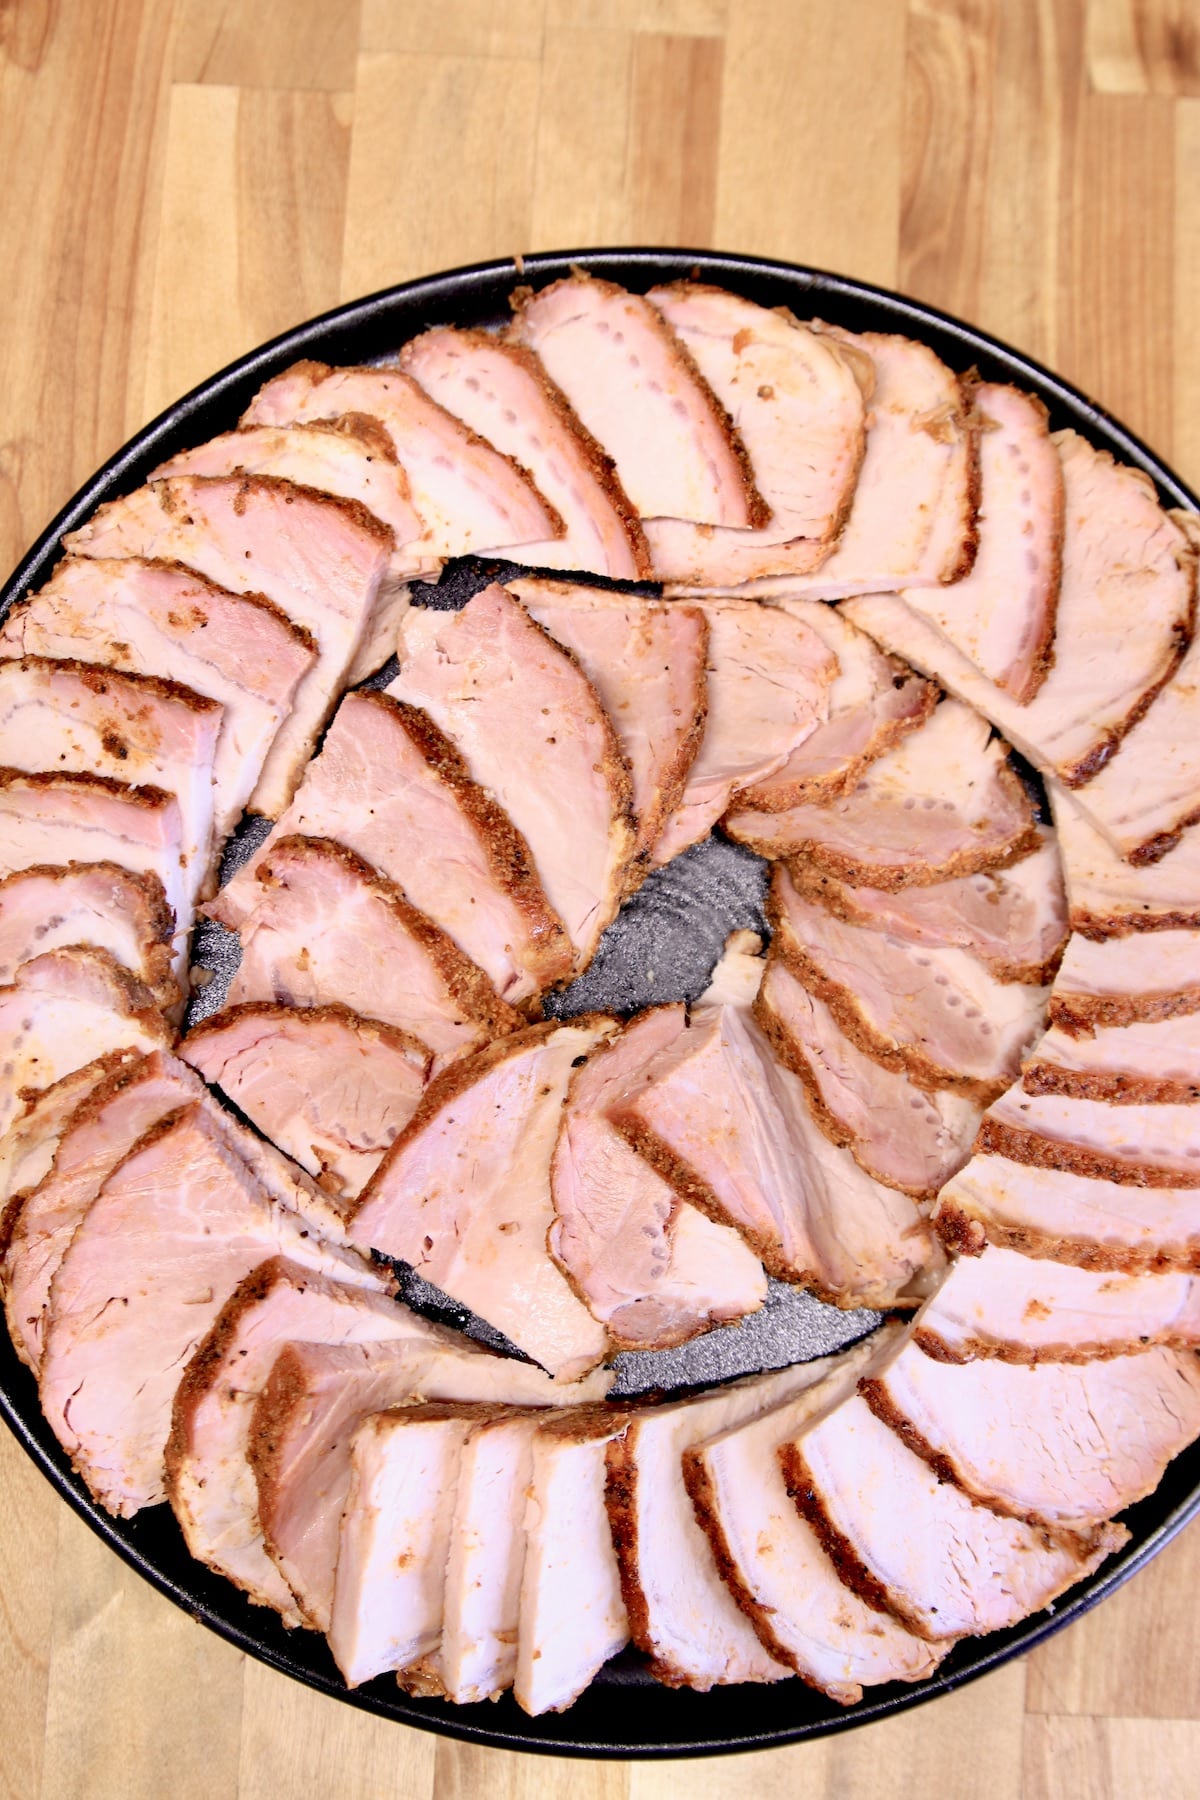 Sliced pork on a round platter.